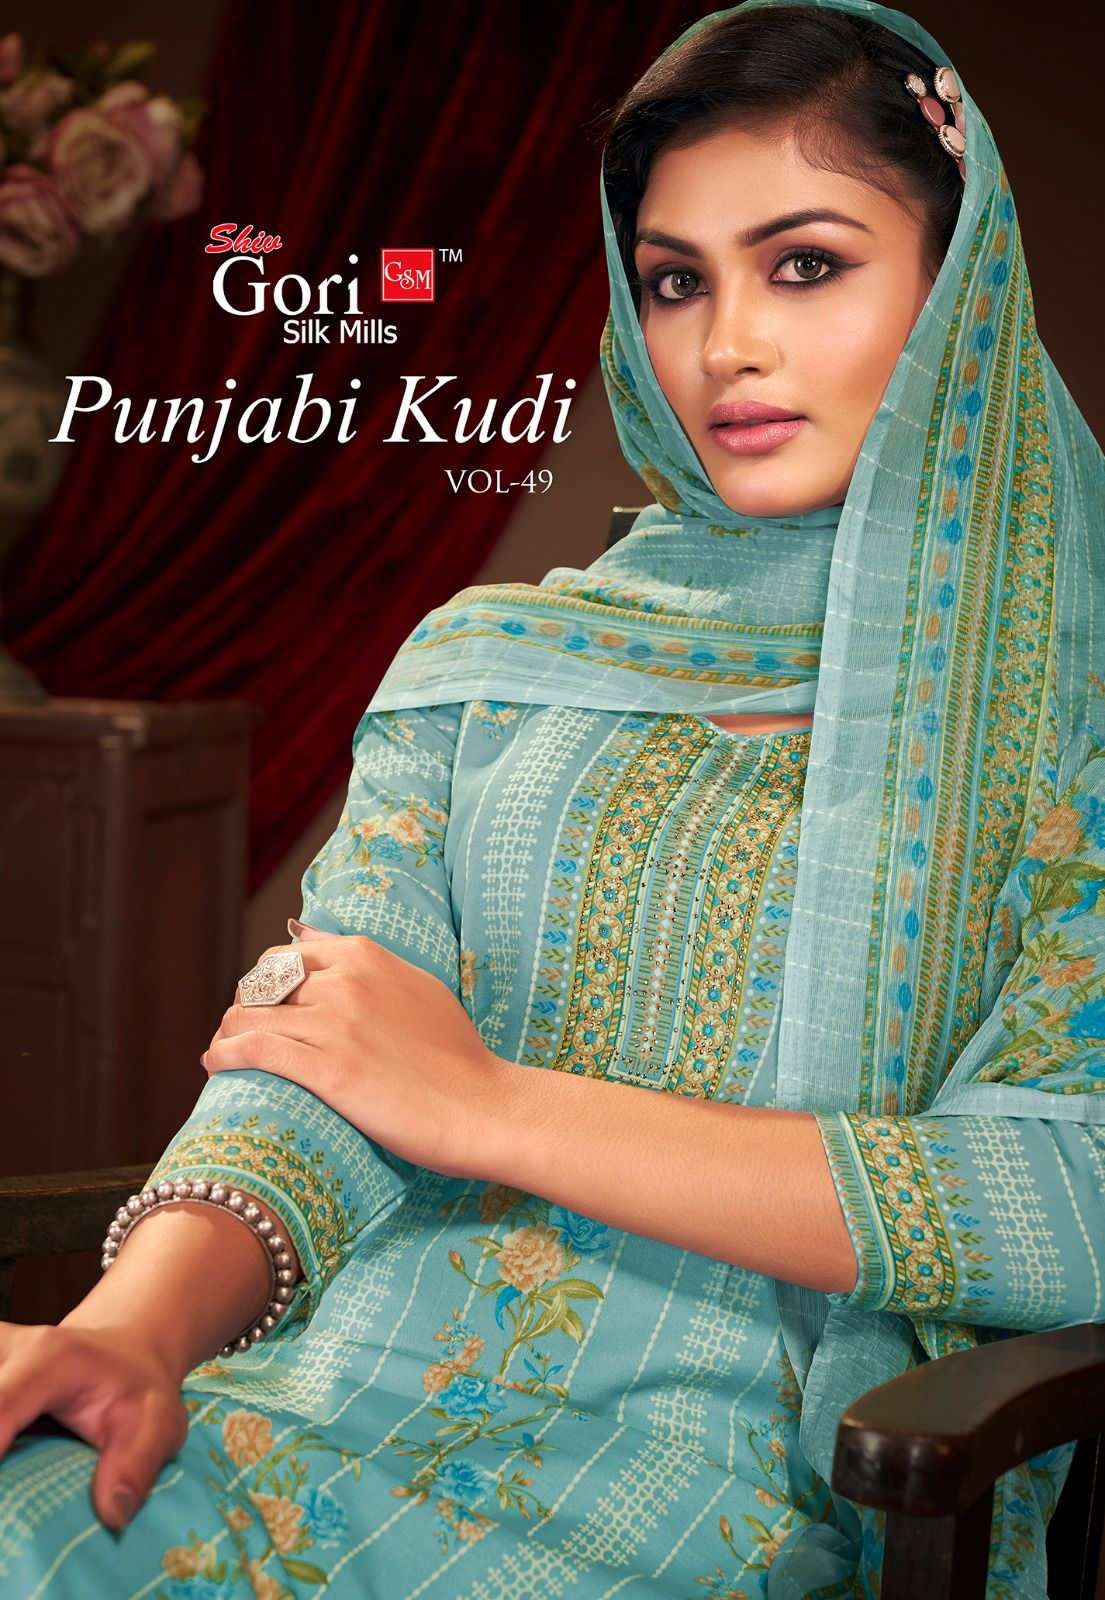 Shiv Gori Panjabi Kudi Vol 49 Daily Wear Unstitch Cotton Suit Online Sales Dealers